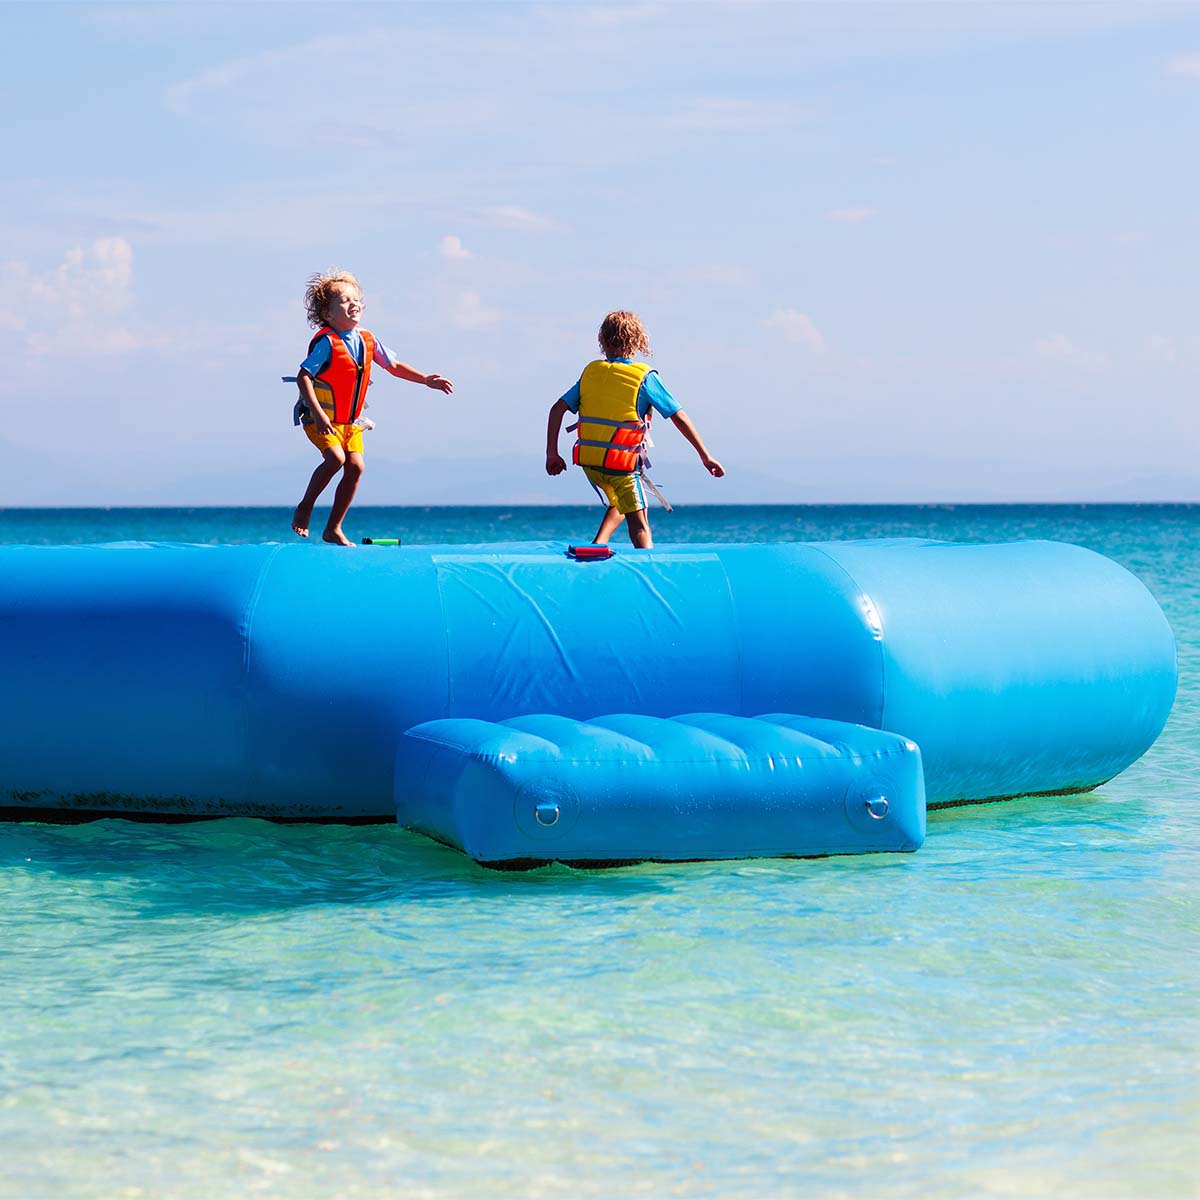 Water Trampoline: Your Next Favorite Summer Activity